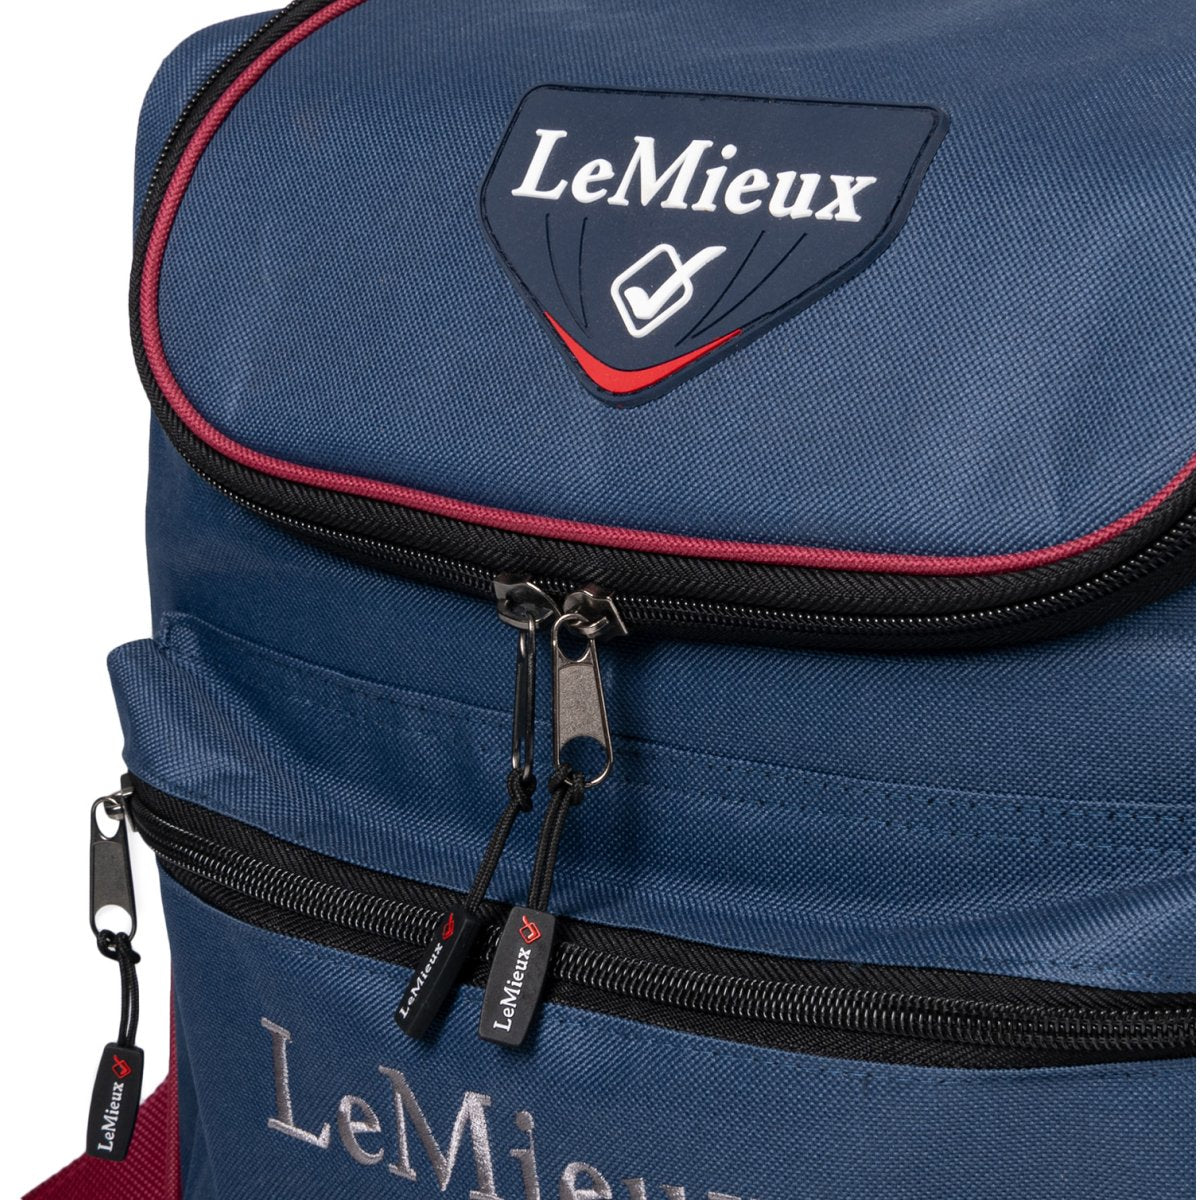 LeMieux Grooming Bag Pro